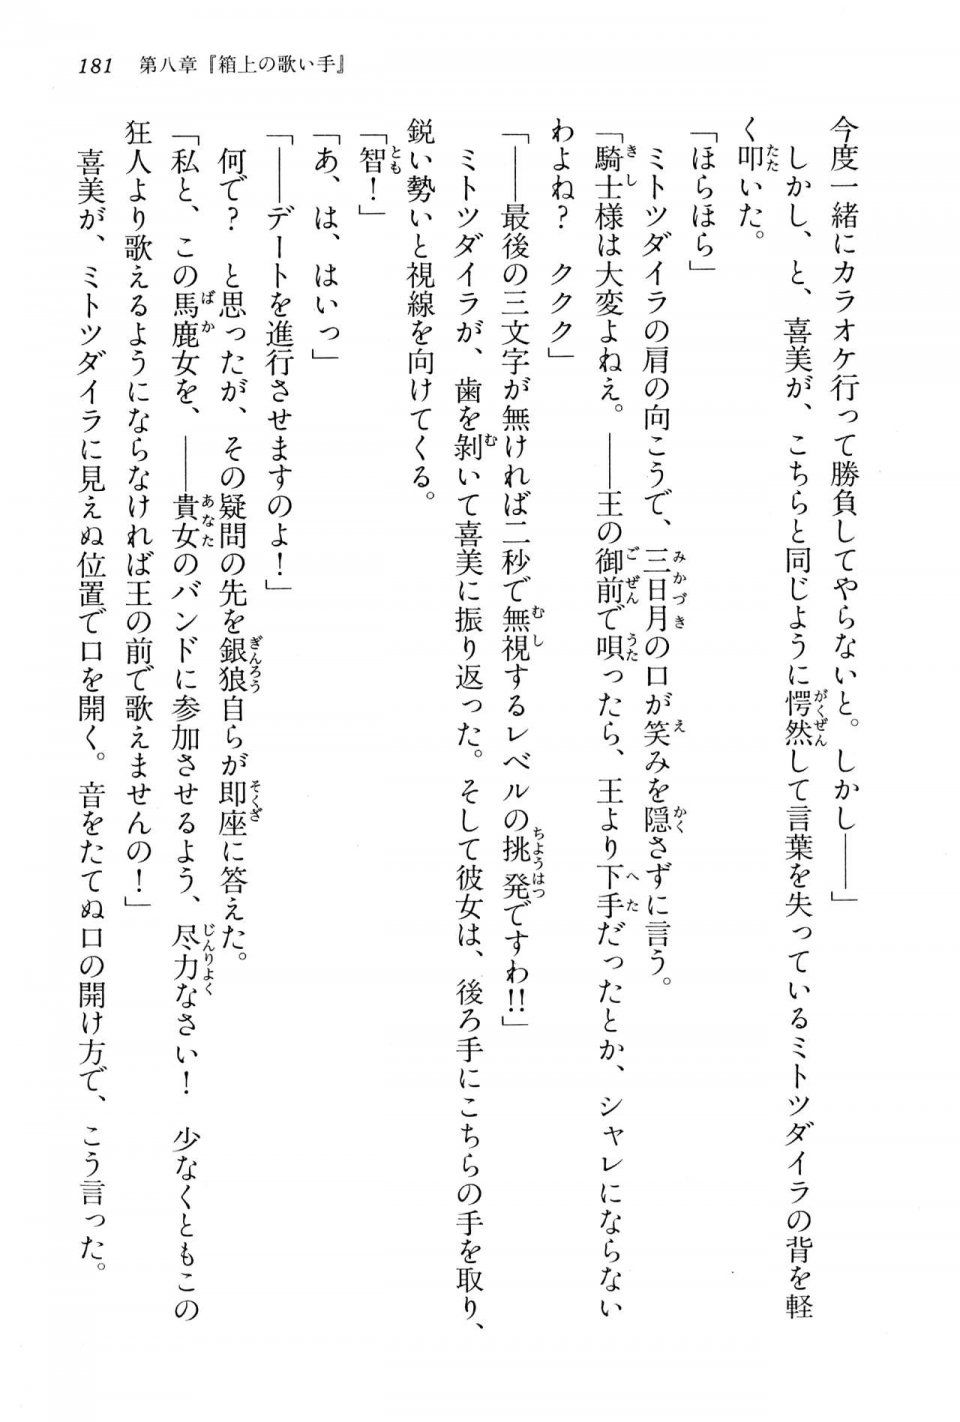 Kyoukai Senjou no Horizon BD Special Mininovel Vol 2(1B) - Photo #185